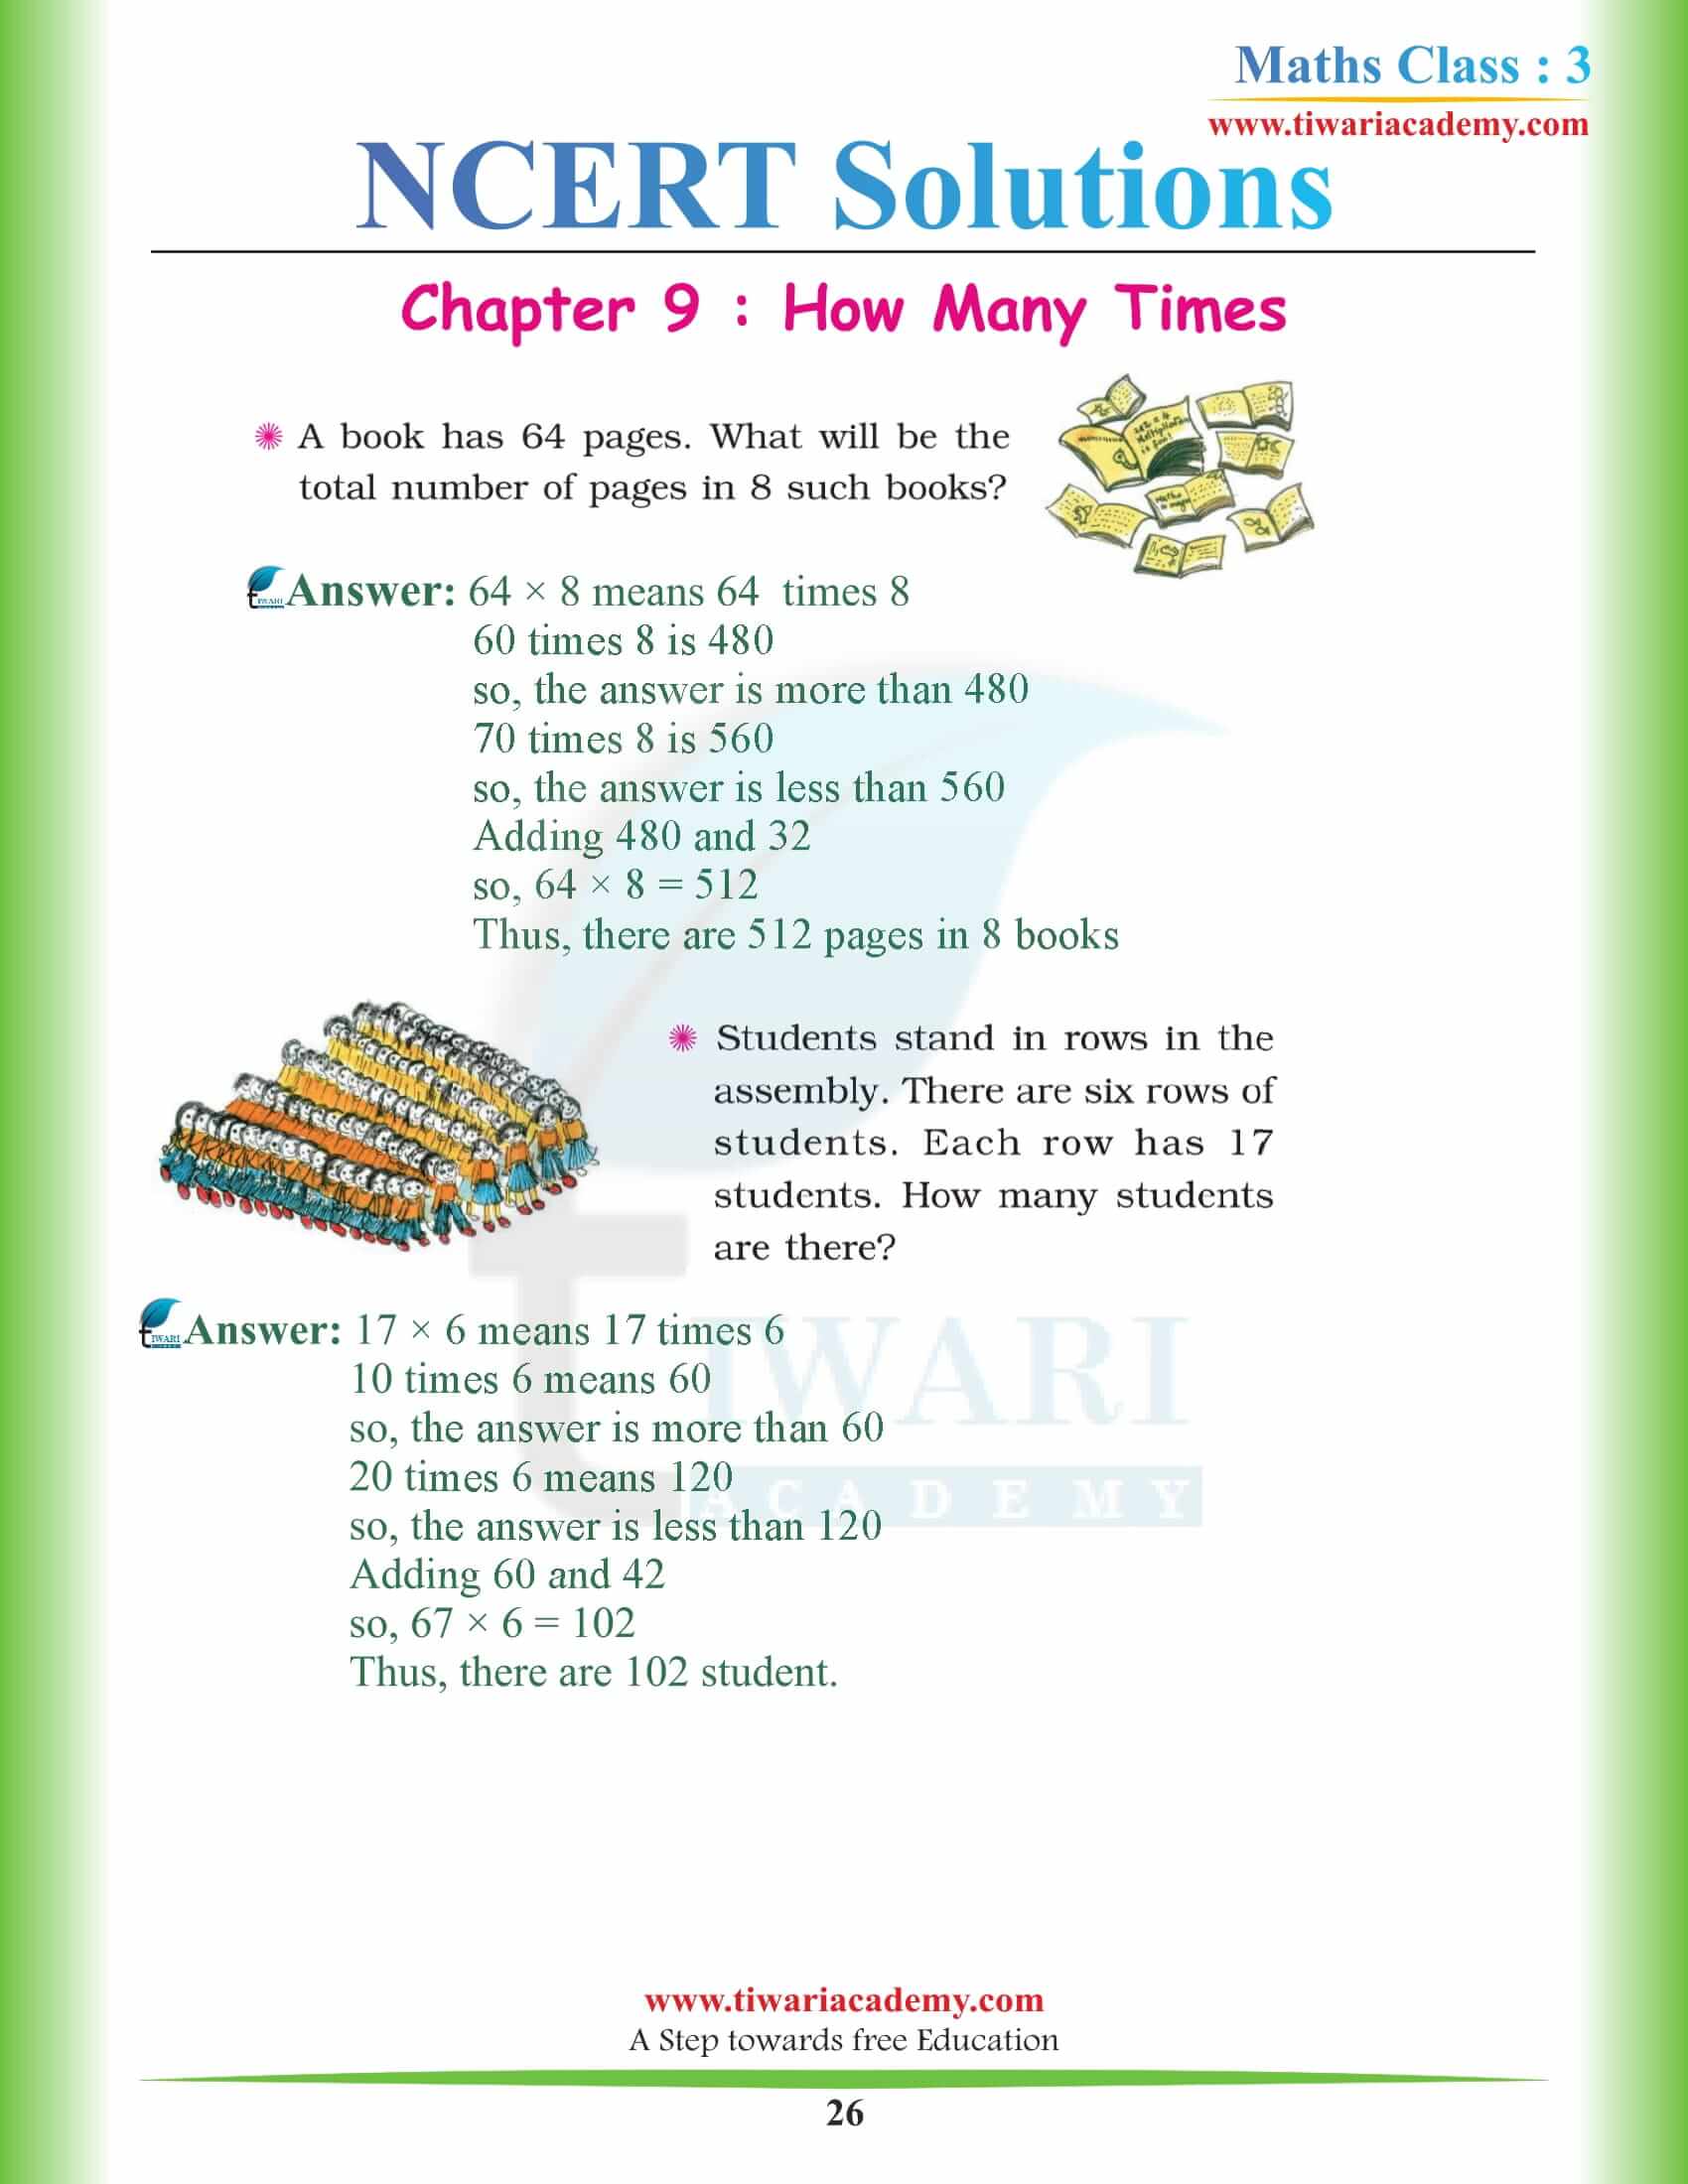 Standard 3 Maths NCERT Chapter 9 Solutions free guide